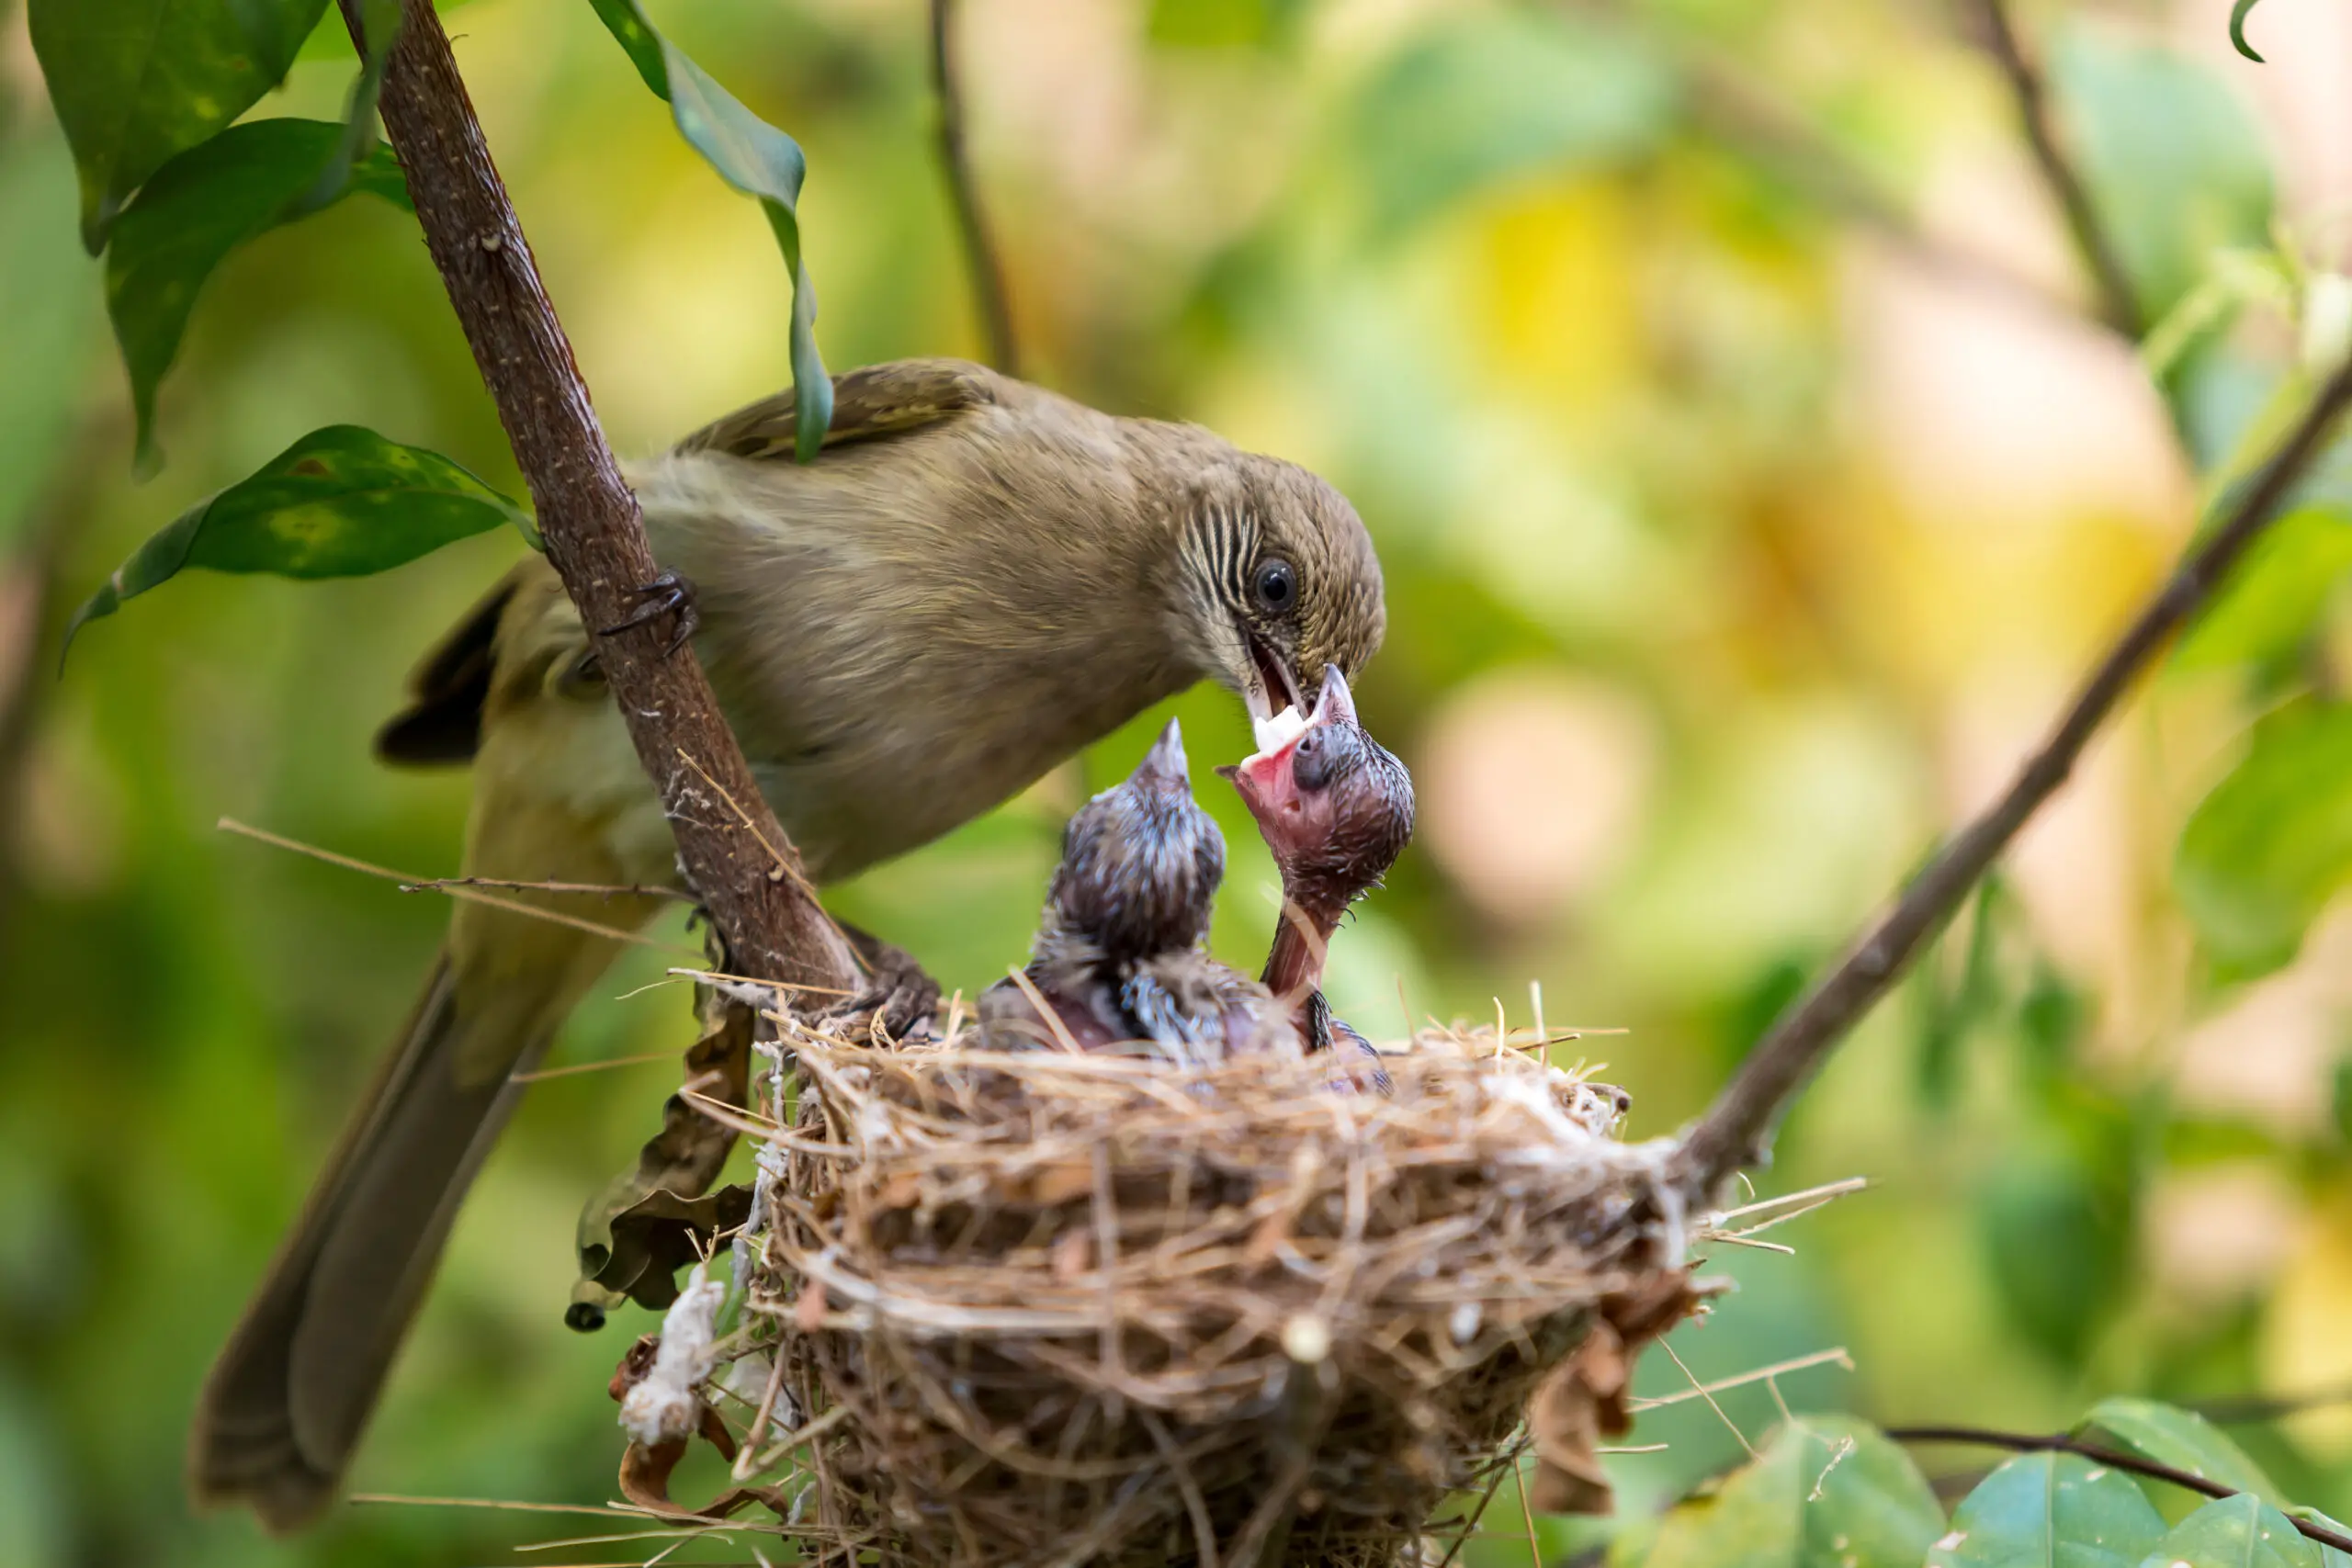 What Do Baby Birds Eat?